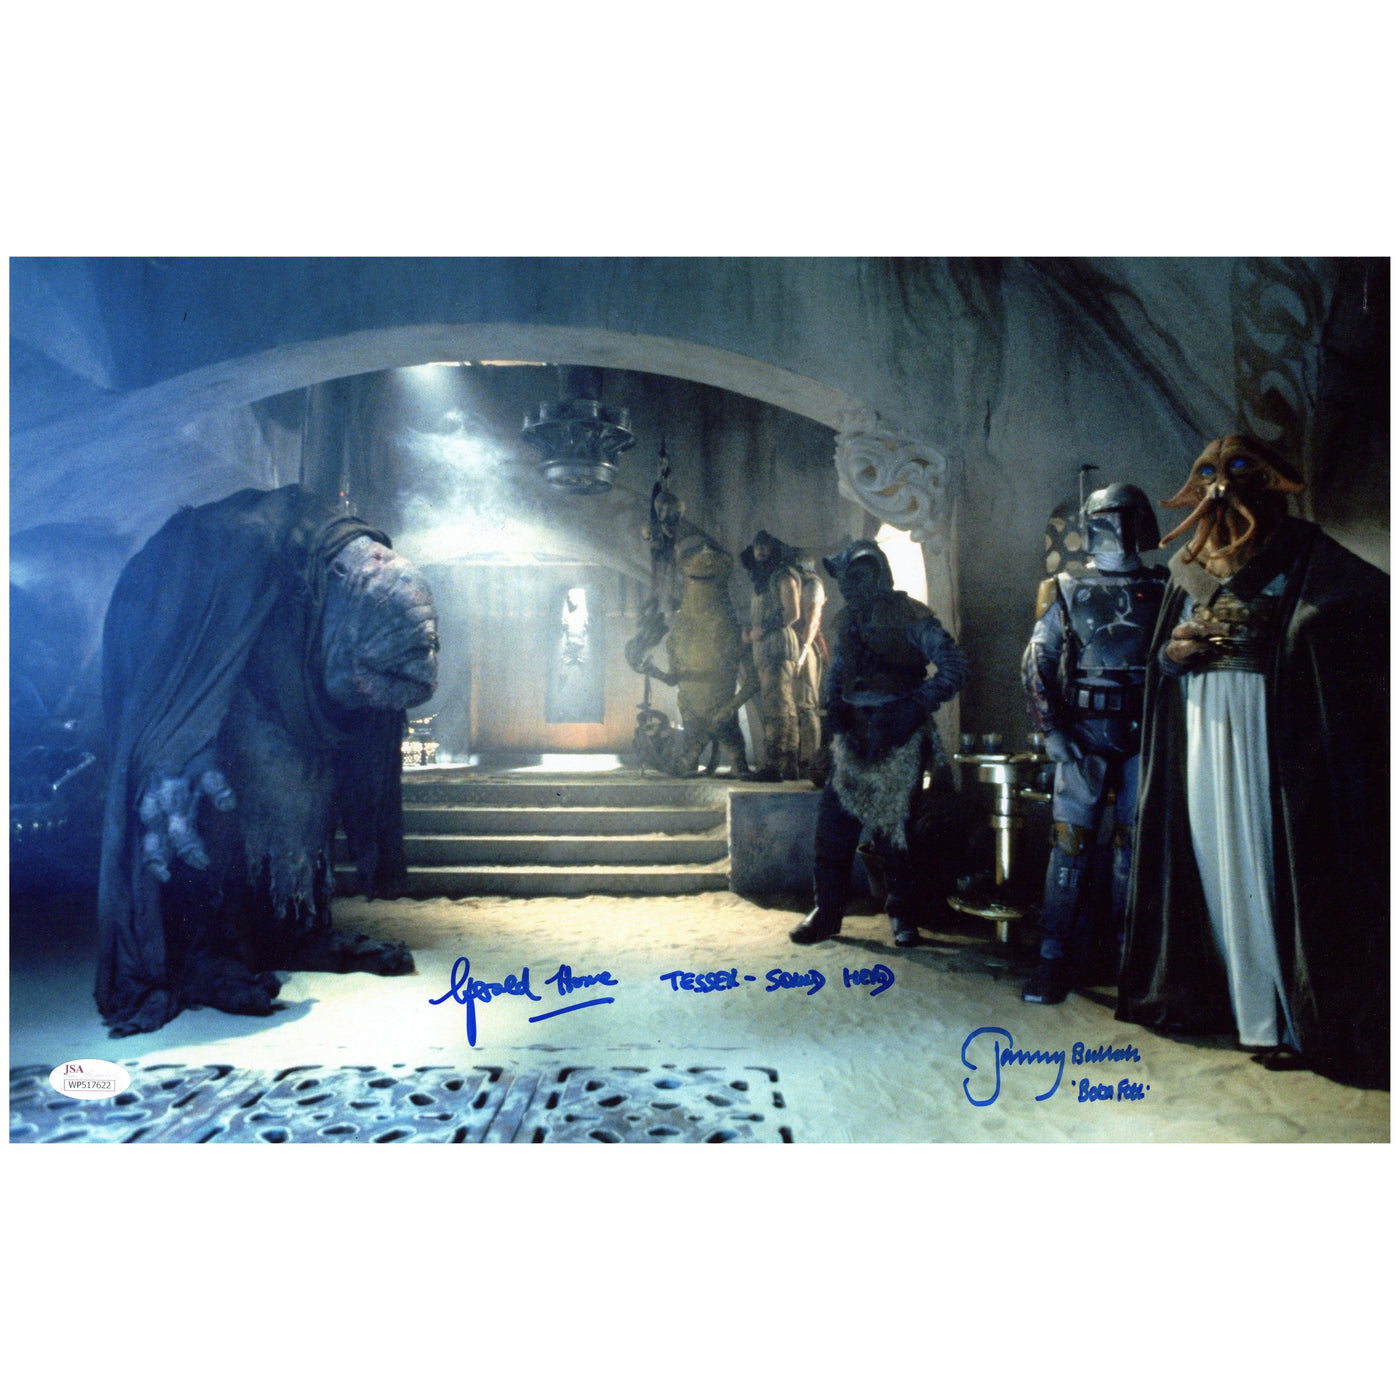 Jeremy Bulloch + Gerald Home Signed 11x17 Photo Star Wars Autographed JSA COA